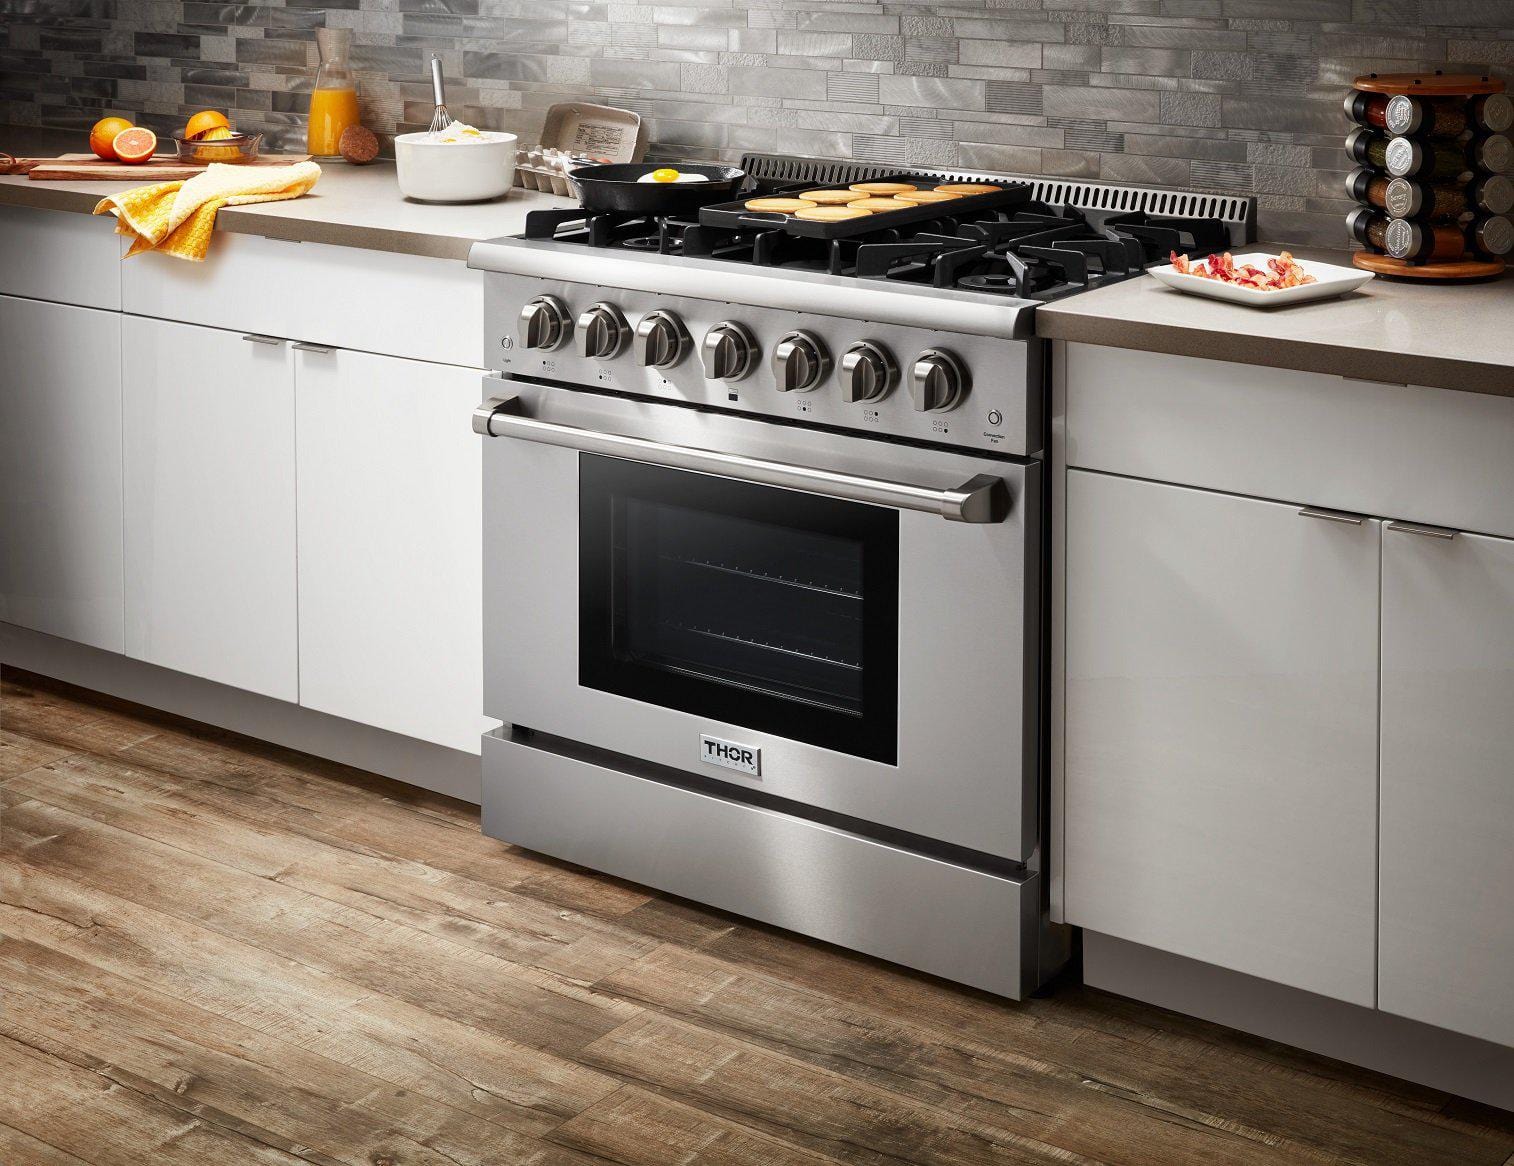 Thor Kitchen 36 in. Professional Natural Gas Range in Stainless Steel HRG3618U Ranges HRG3618U Luxury Appliances Direct